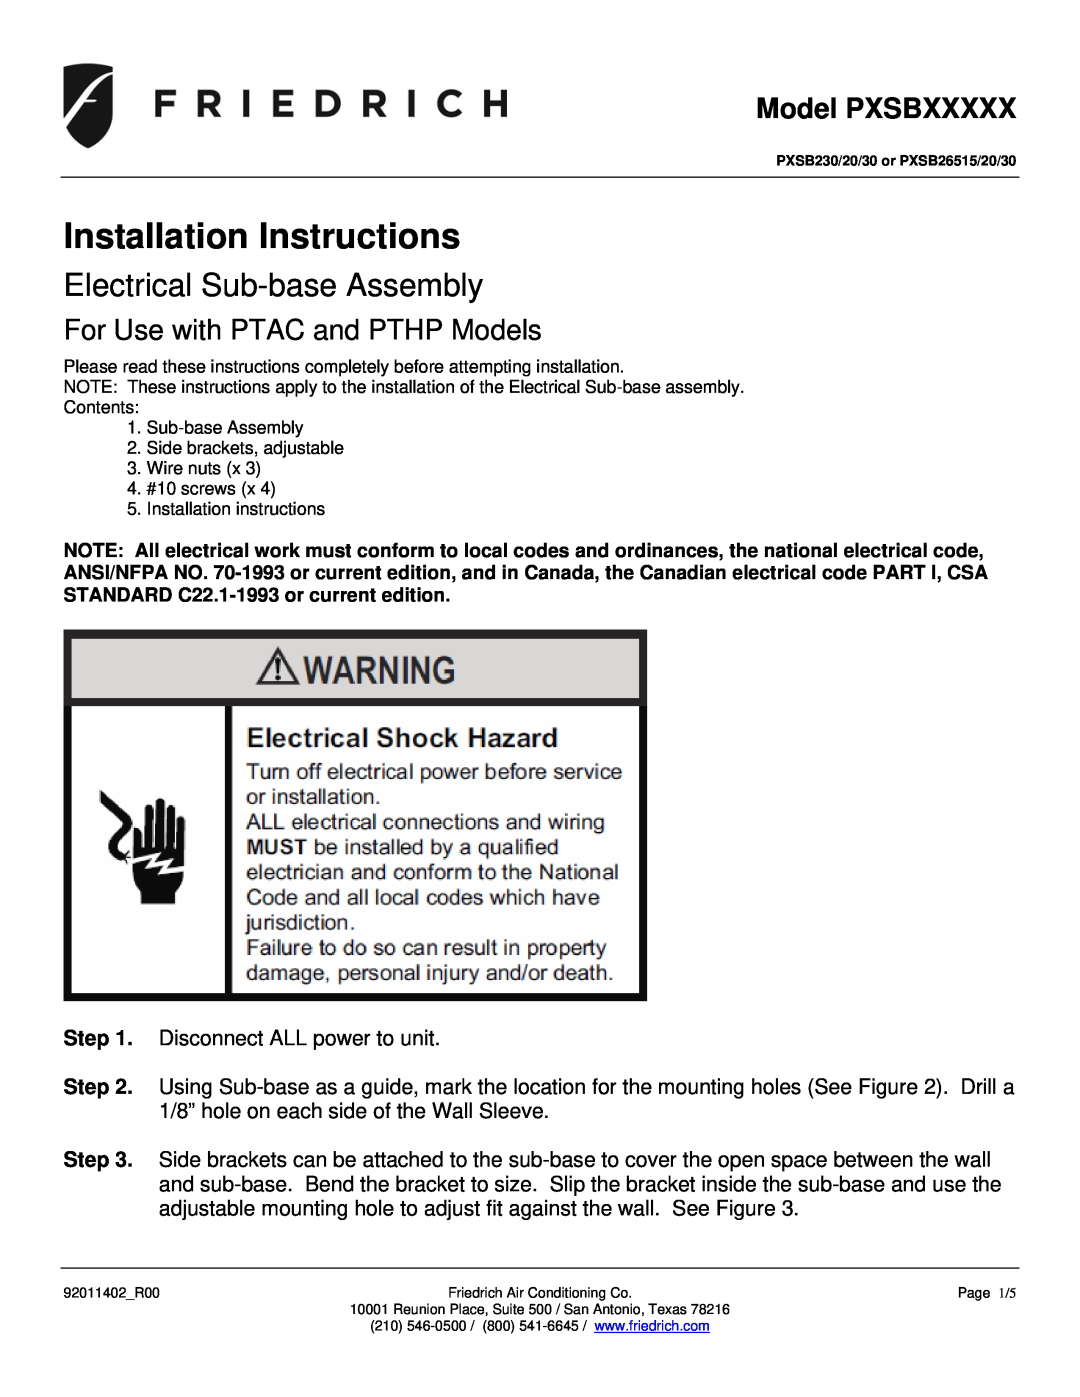 Friedrich PXSB26515/20/30, PXSB230/20/30 installation instructions Model PXSBXXXXX, Installation Instructions 